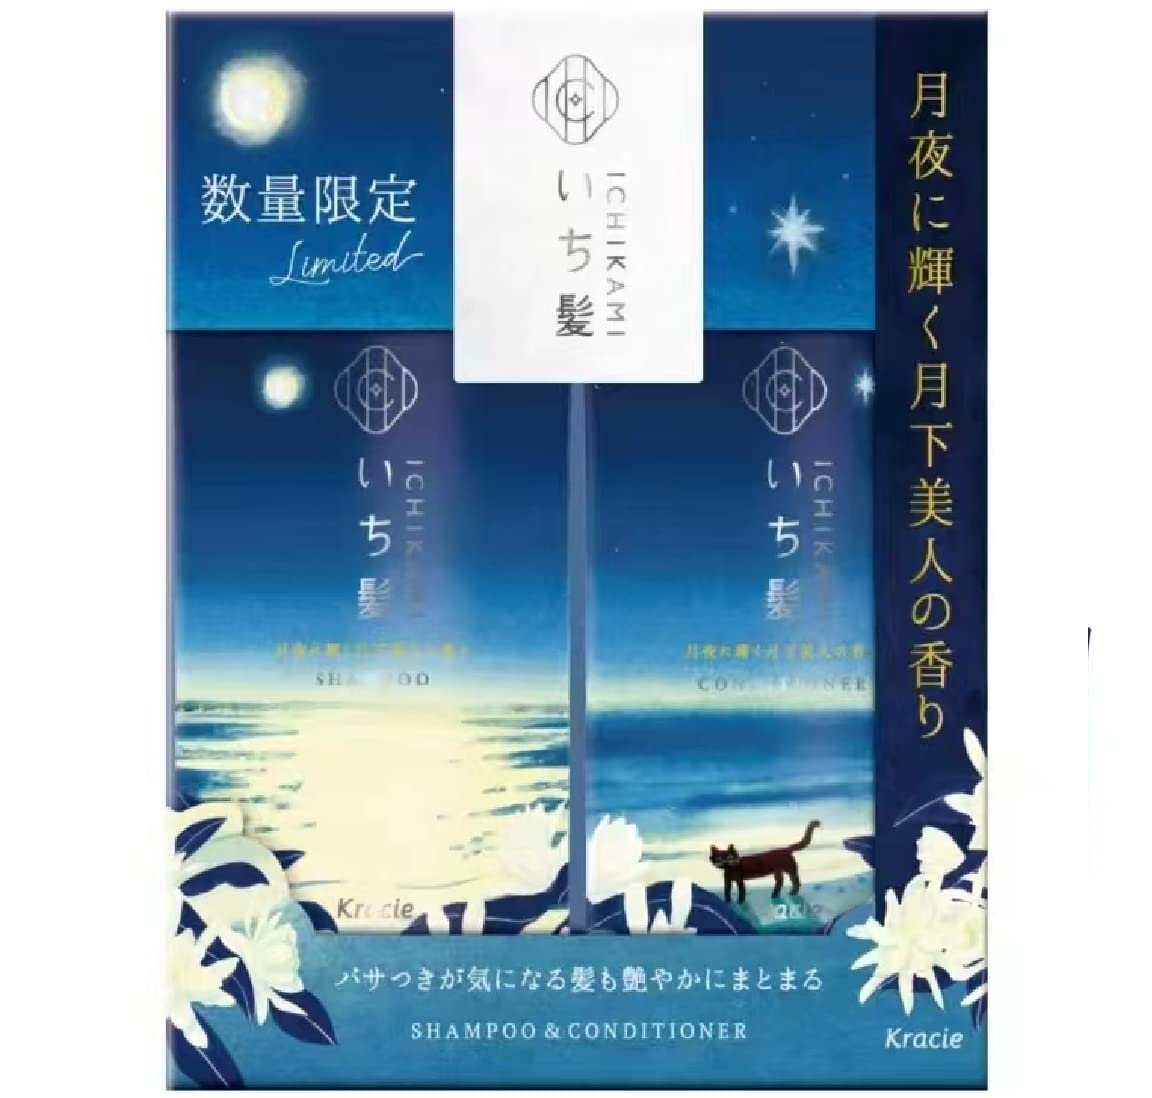 KRACIE Ichikami Smoothing Shampoo and Conditioner Set - Limited Edition 480ml + 480g